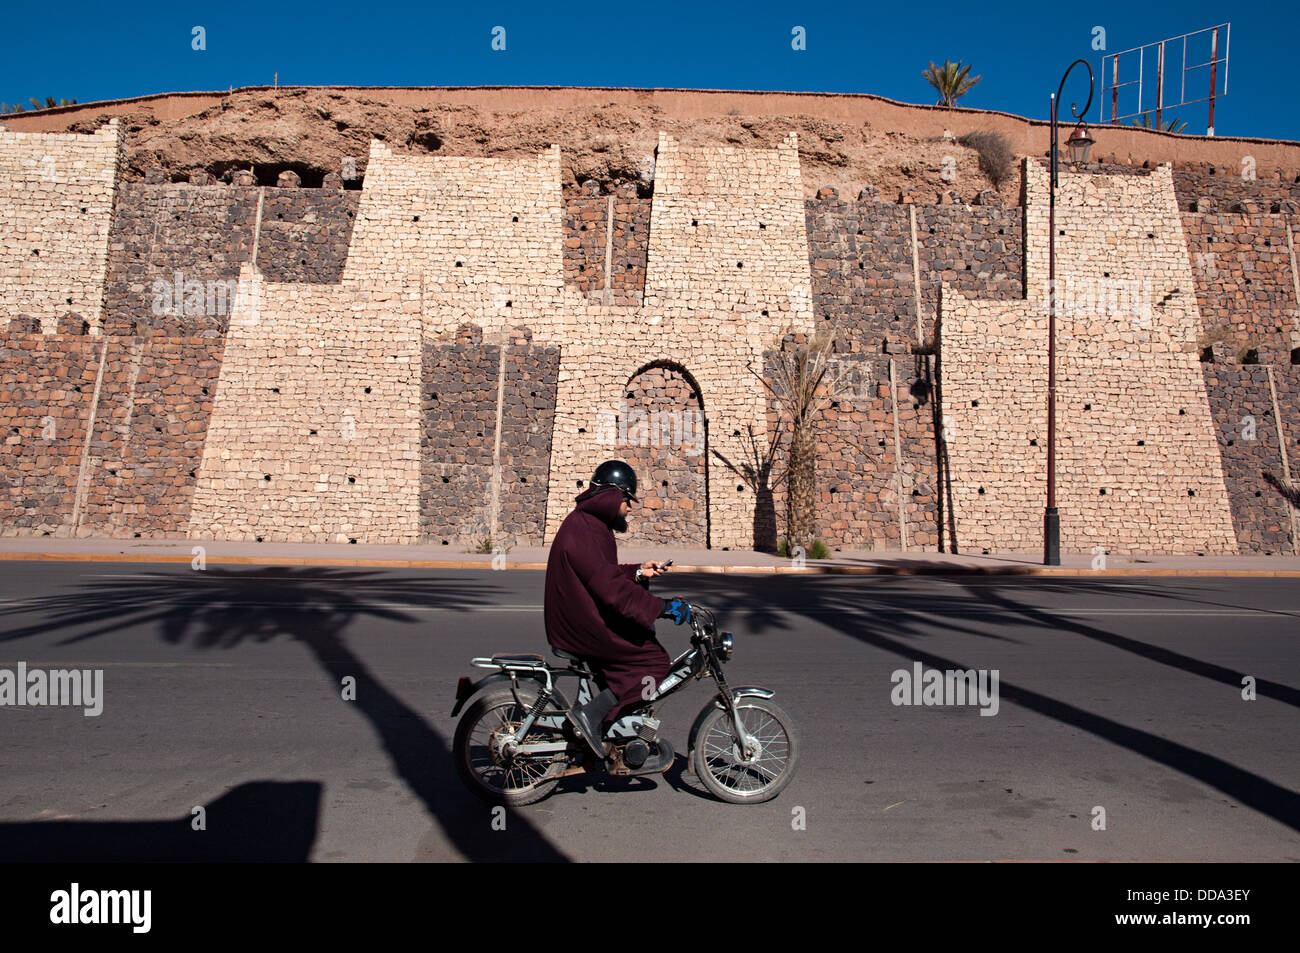 Street scene in Ouarzazate city center, Morocco Stock Photo